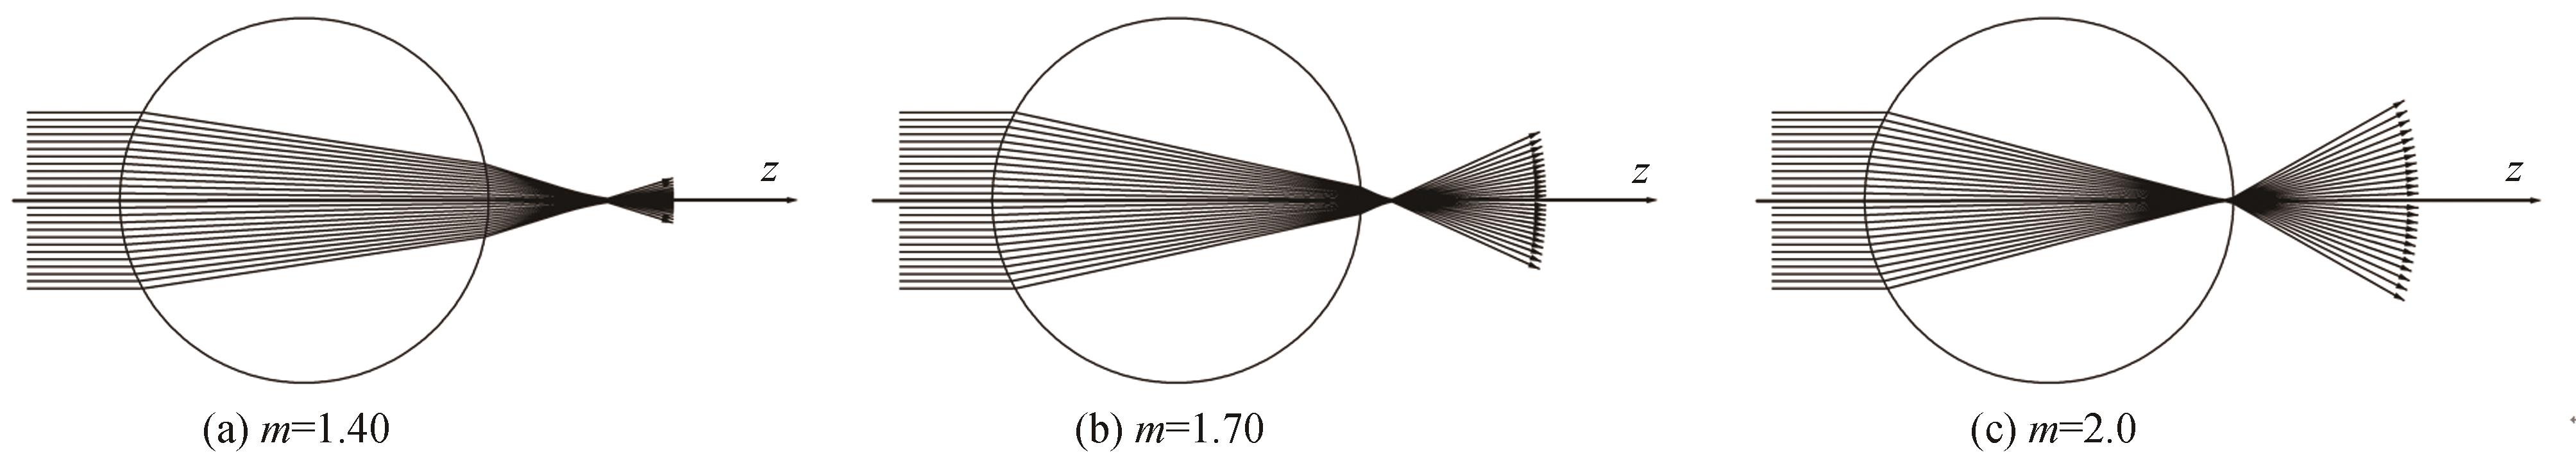 Geometric optical model of spherical particle focusing